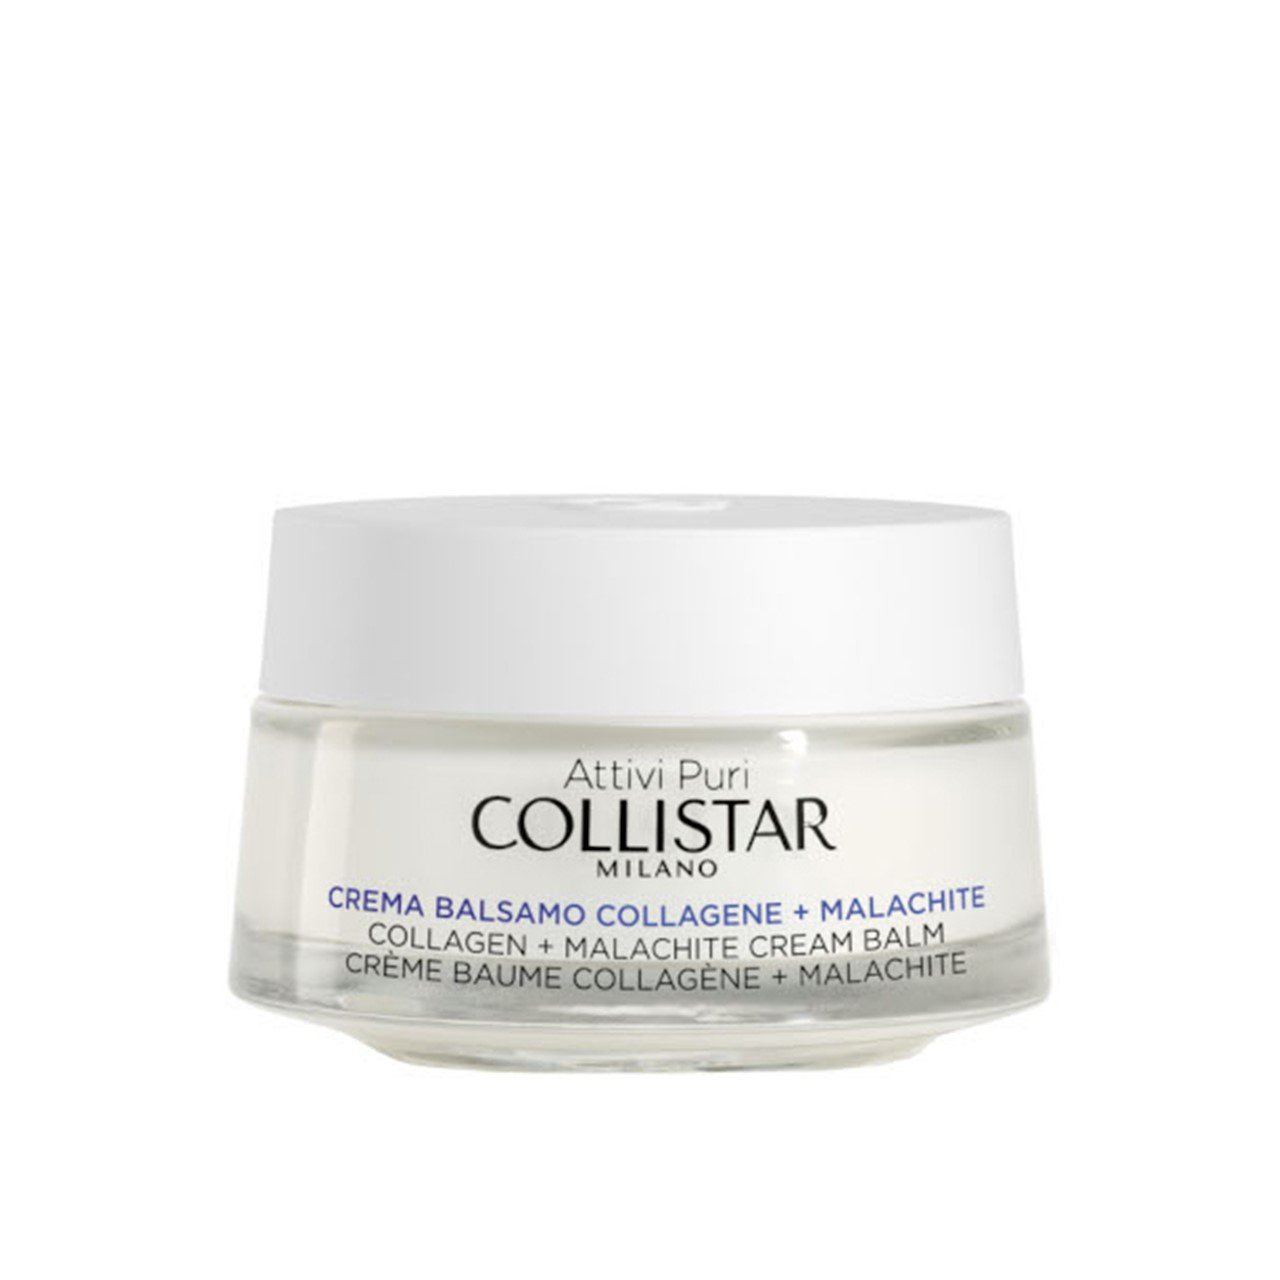 Collistar Pure Actives Collagen + Malachite Cream Balm 50ml